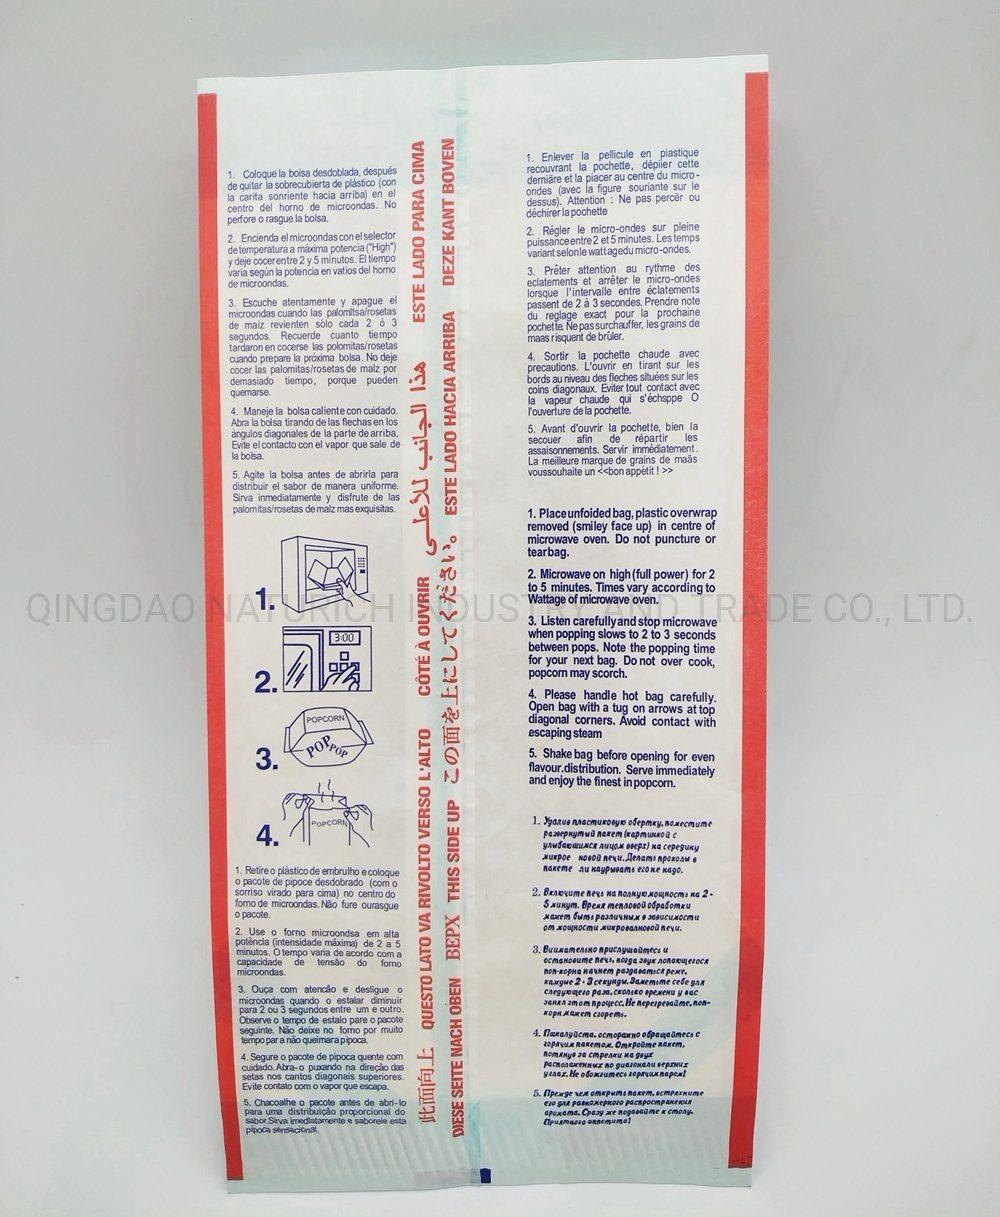 Custom Printed Microwave Popcorn Paper Bag China Factory